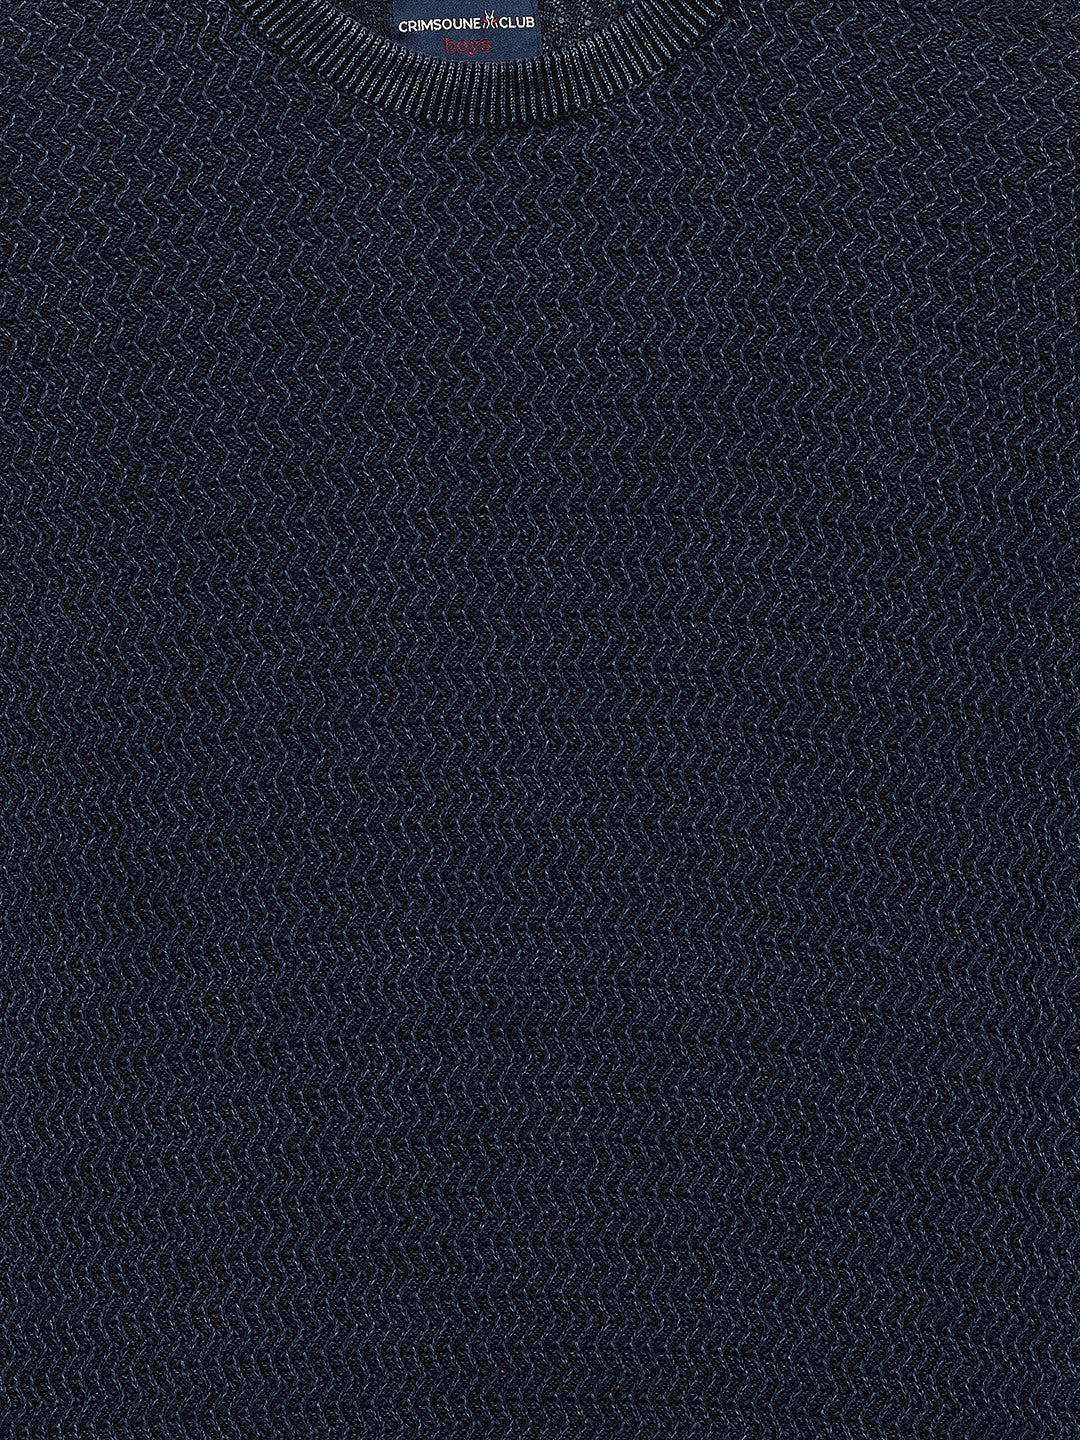 Blue Round Neck Sweater - Boys Sweaters